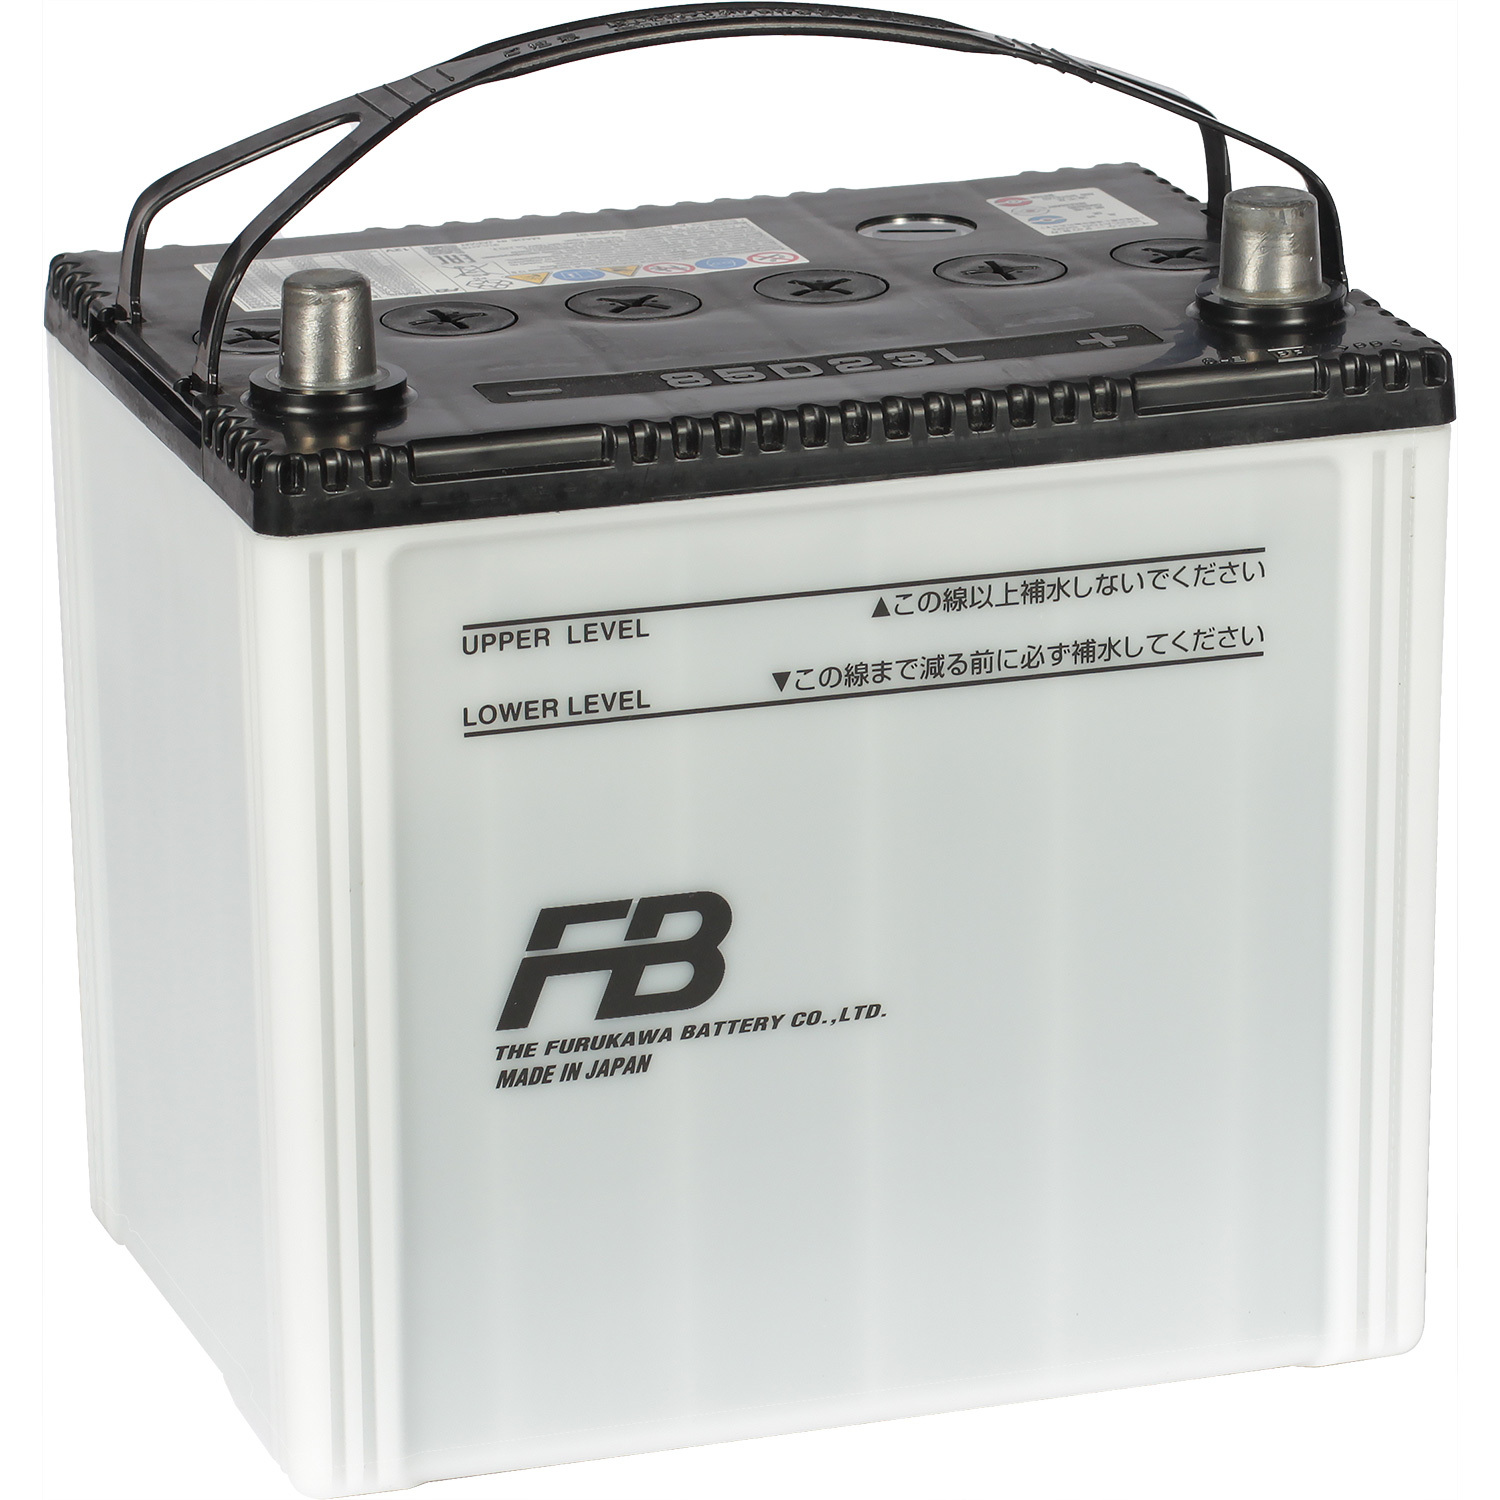 Furukawa Battery Автомобильный аккумулятор Furukawa Battery Altica High-Grade 70 Ач обратная полярность D23L